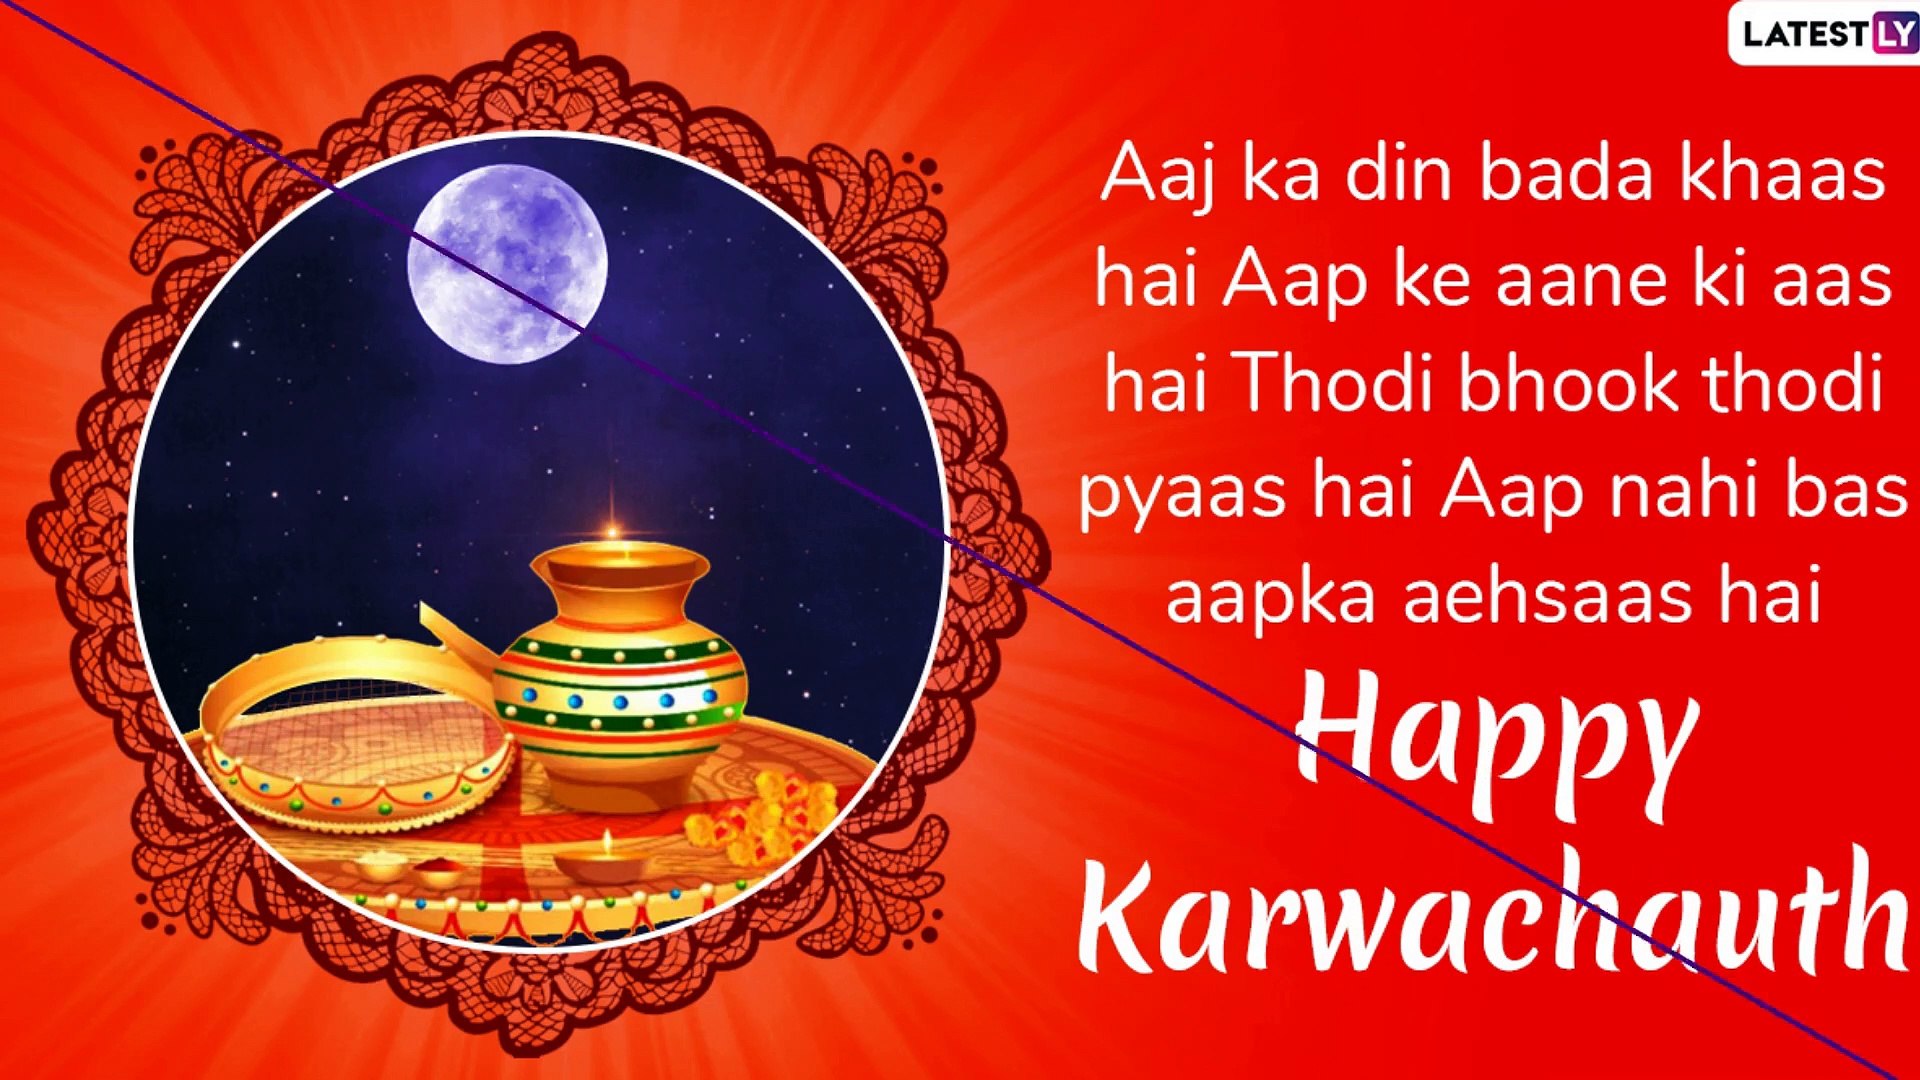 Karwa chauth wishes in hindi whatsapp messages to wish your husband happy karva chauth